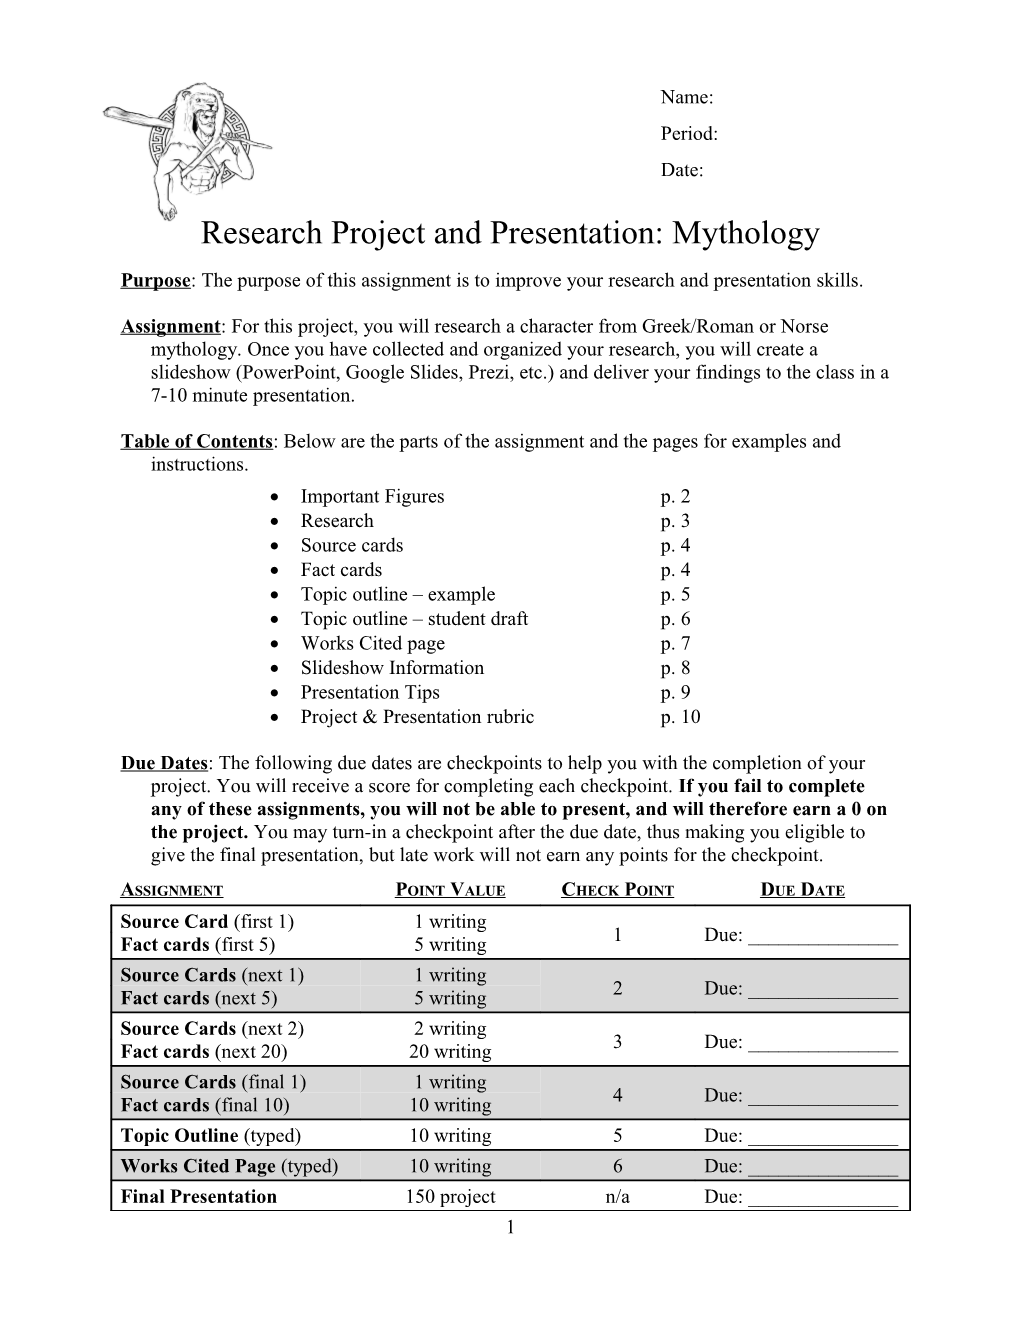 Research Project and Presentation: Mythology